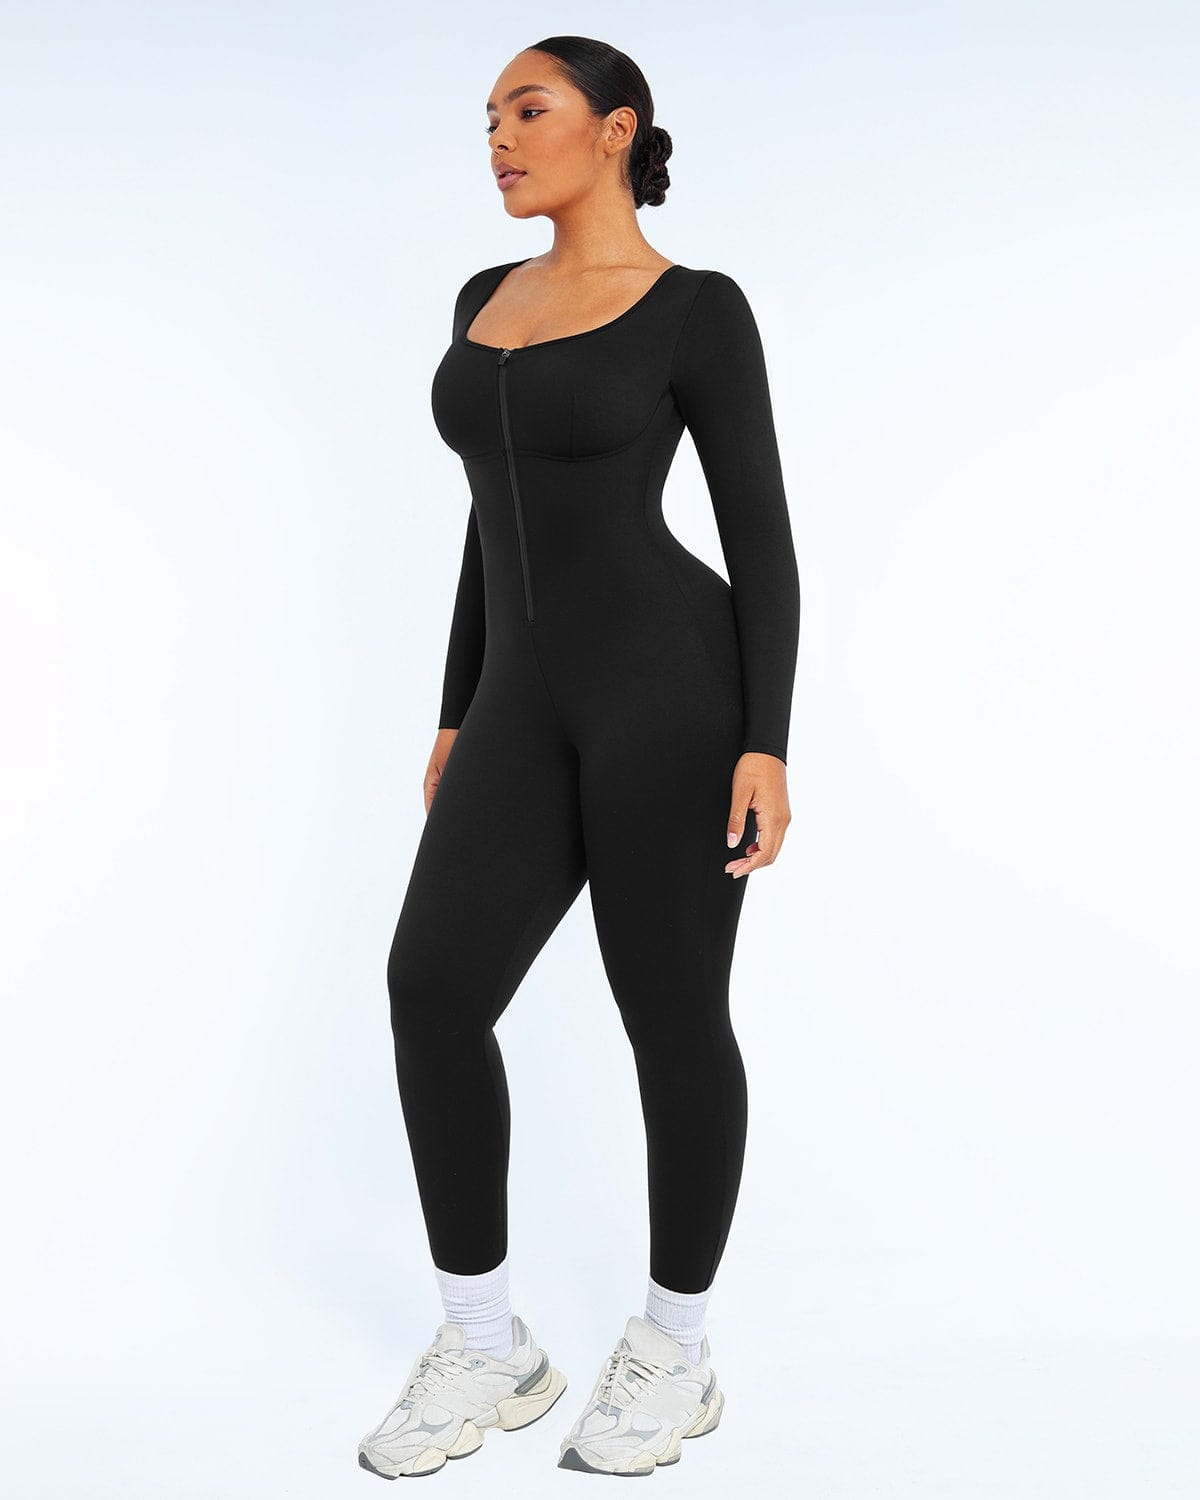 AirSlim® Long Sleeve Sport Shaping Jumpsuit